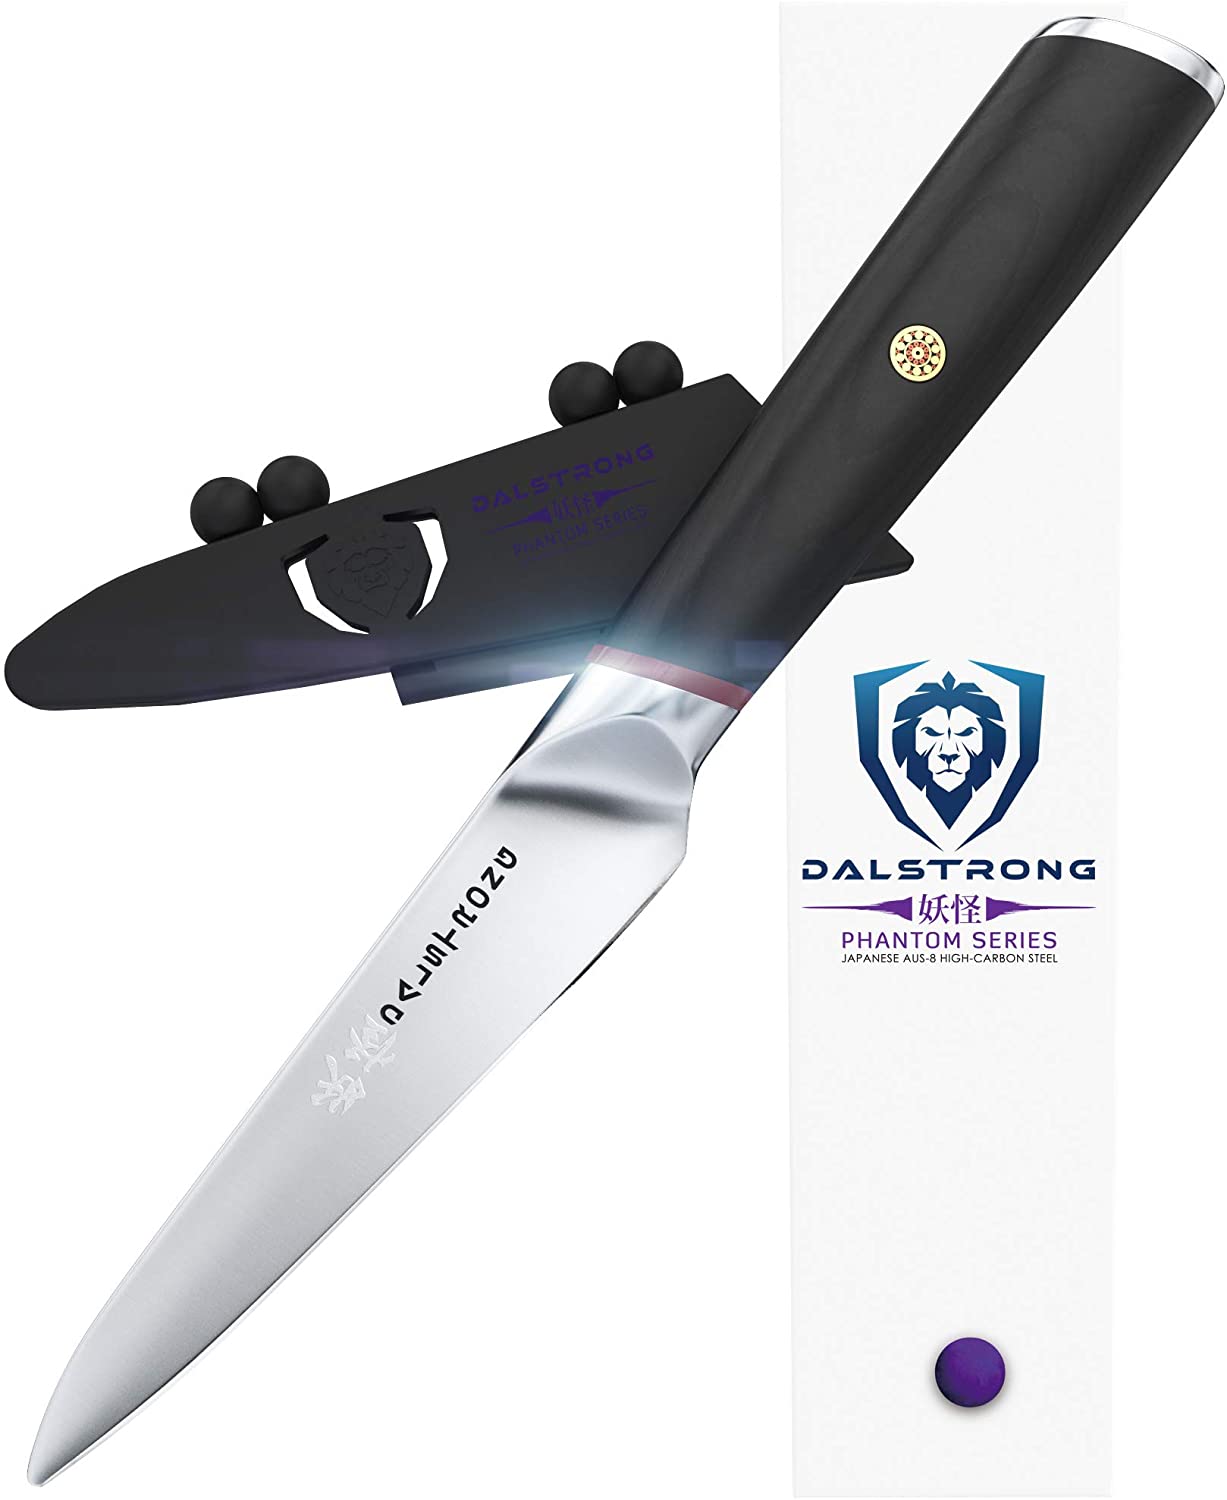 Global Cromova G-21 – 6 1/4 inch, 16cm Flexible Boning Knife – The